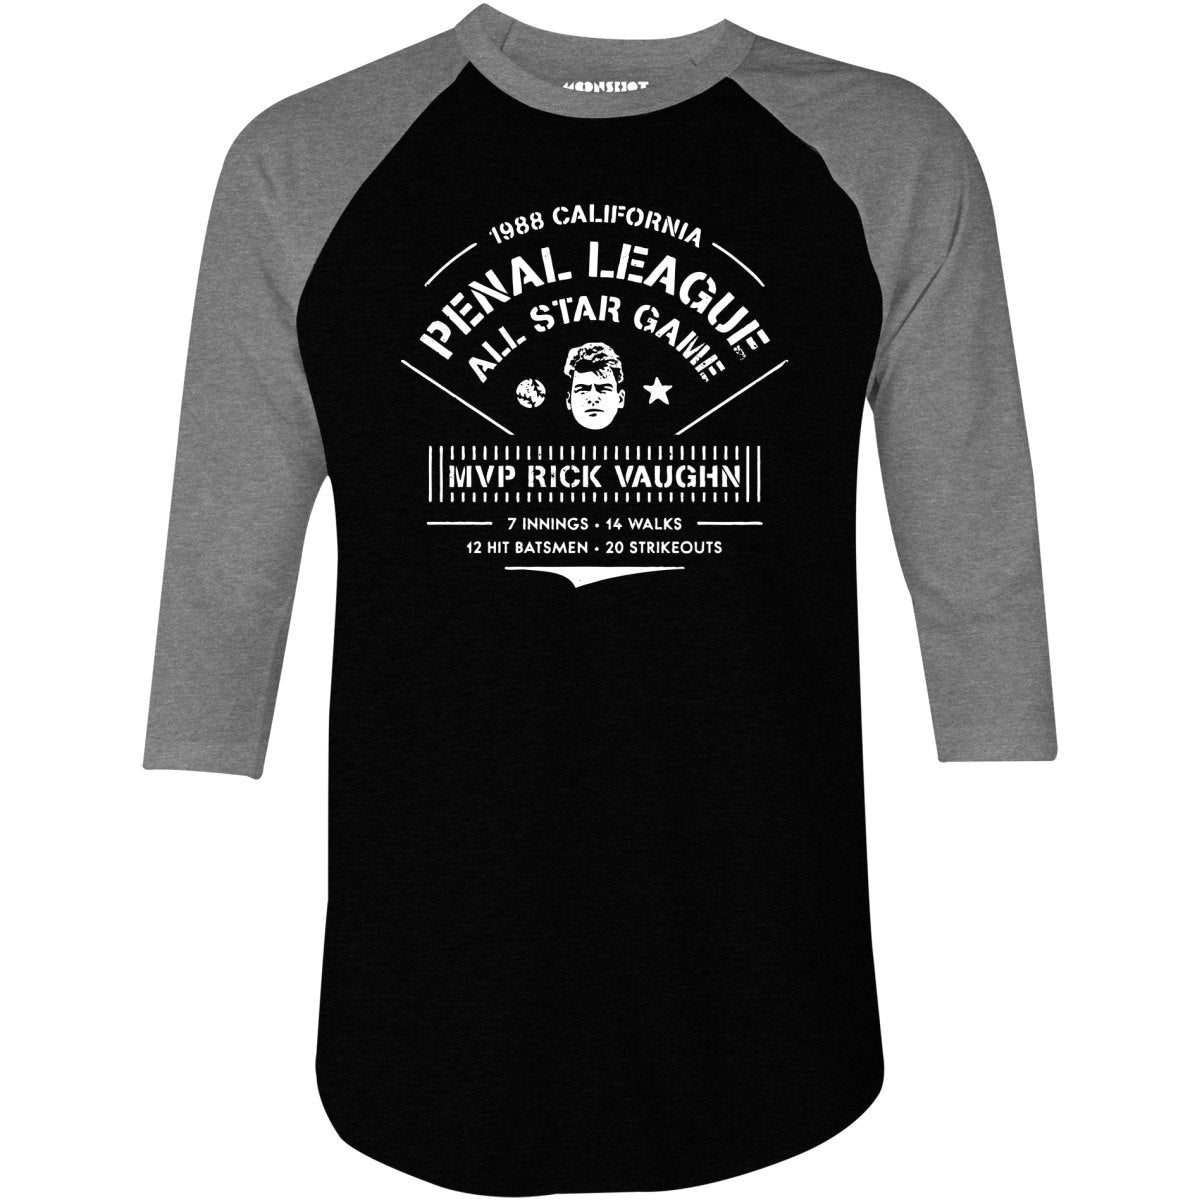 California Penal League All Star Game - Rick Vaughn MVP - 3/4 Sleeve Raglan T-Shirt